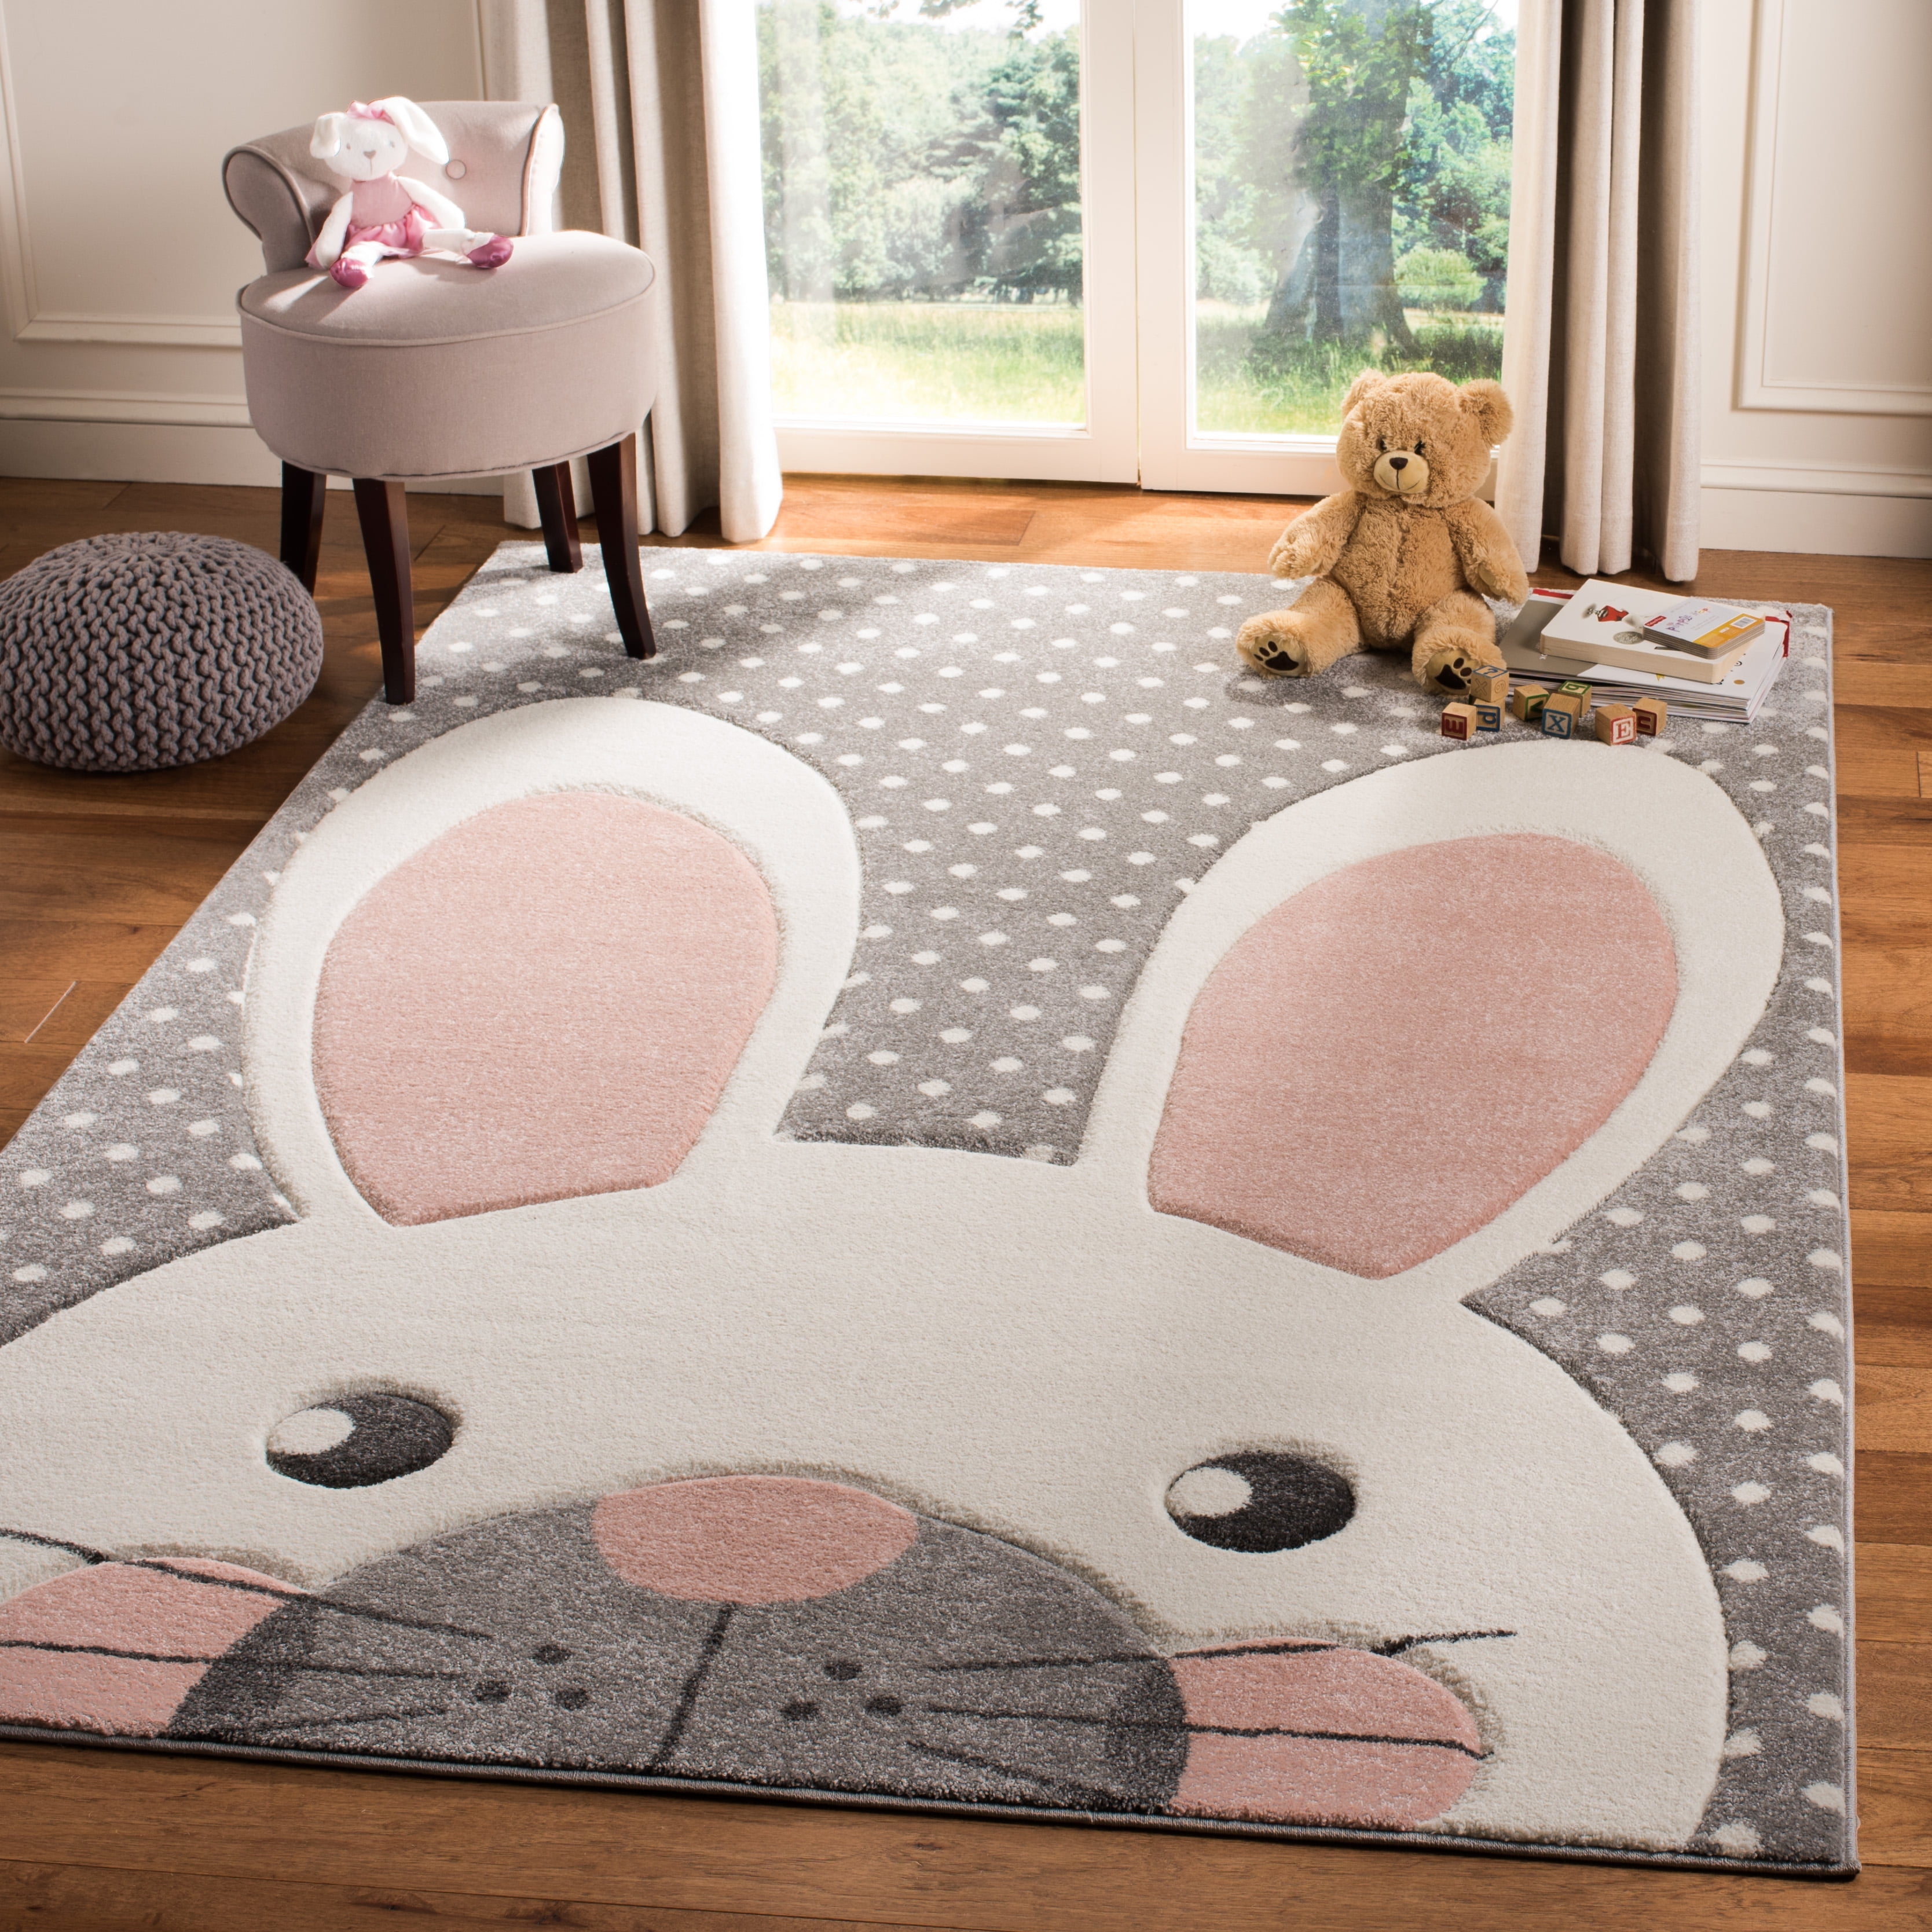 Hand Drawn Cute Bunny Crawling Mat Home Room Floor Decor Area Rugs Yoga Carpet 